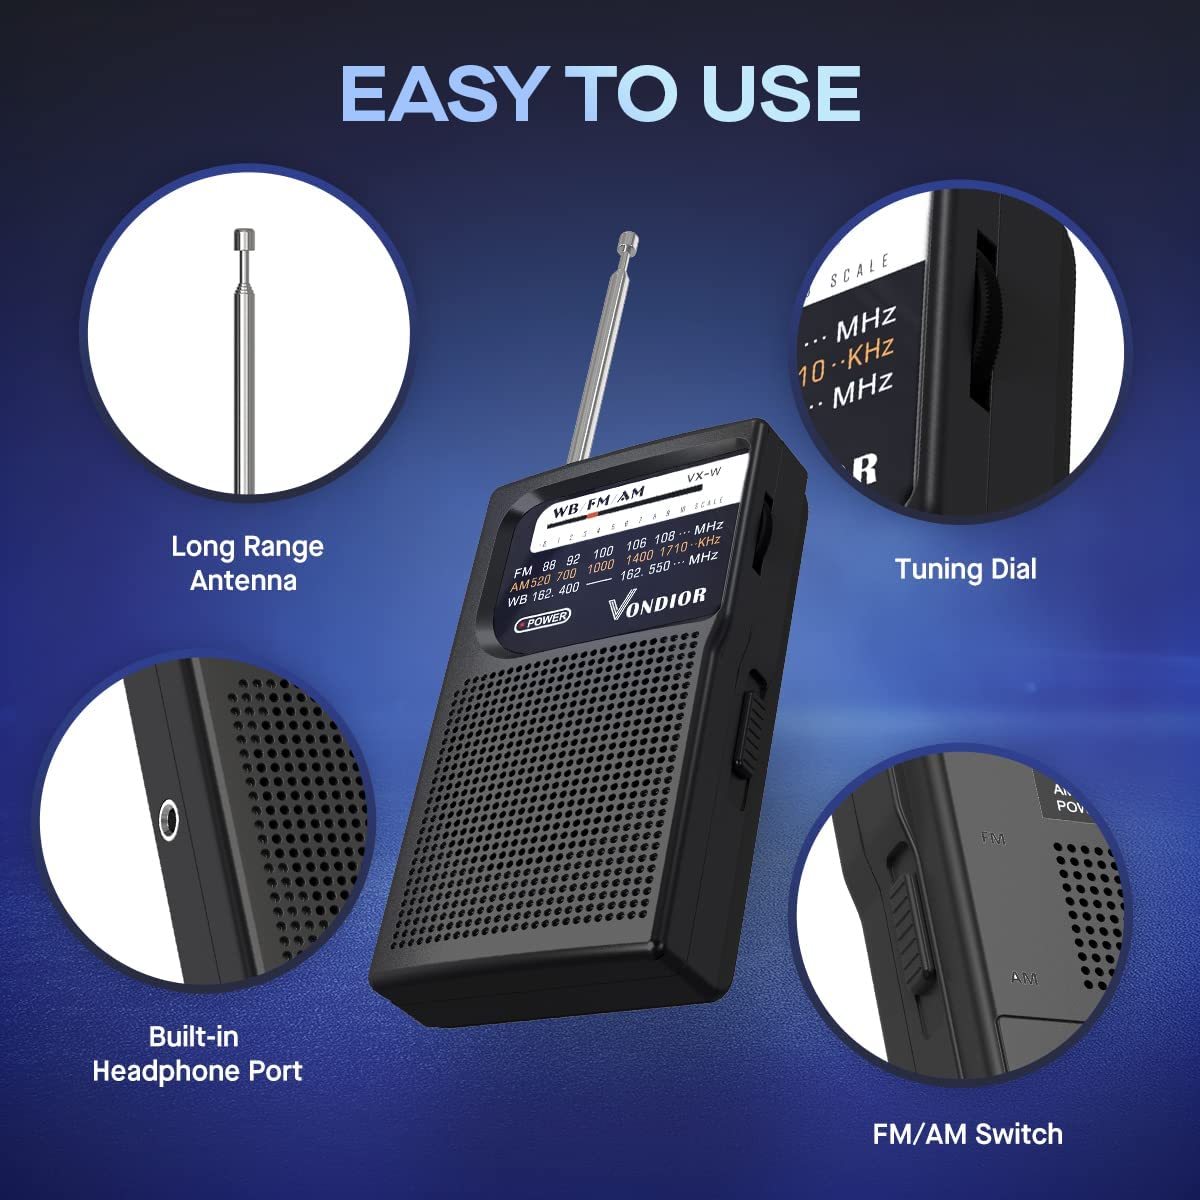 Vondior Portable NOAA Weather Radio, Battery Operated Emergency NOAA/AM/FM Radio with Best Reception, Pocket Weather Alert Radio